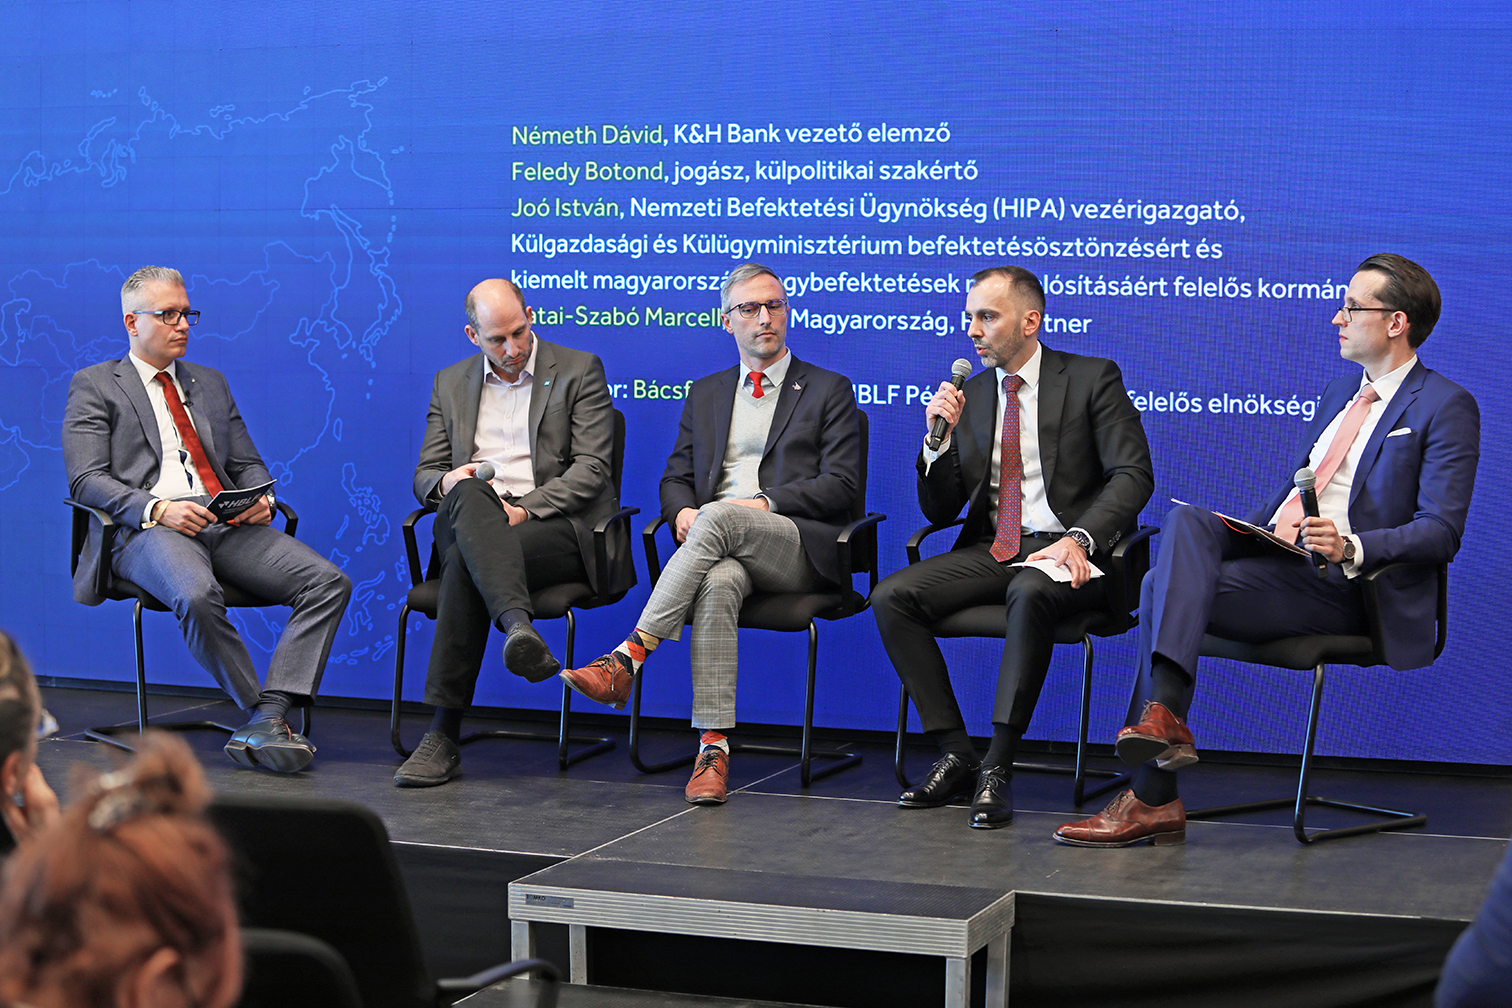 Computing | Geopolitics, Economics, AI and Quantum Computing: HBLF Monetary Summit